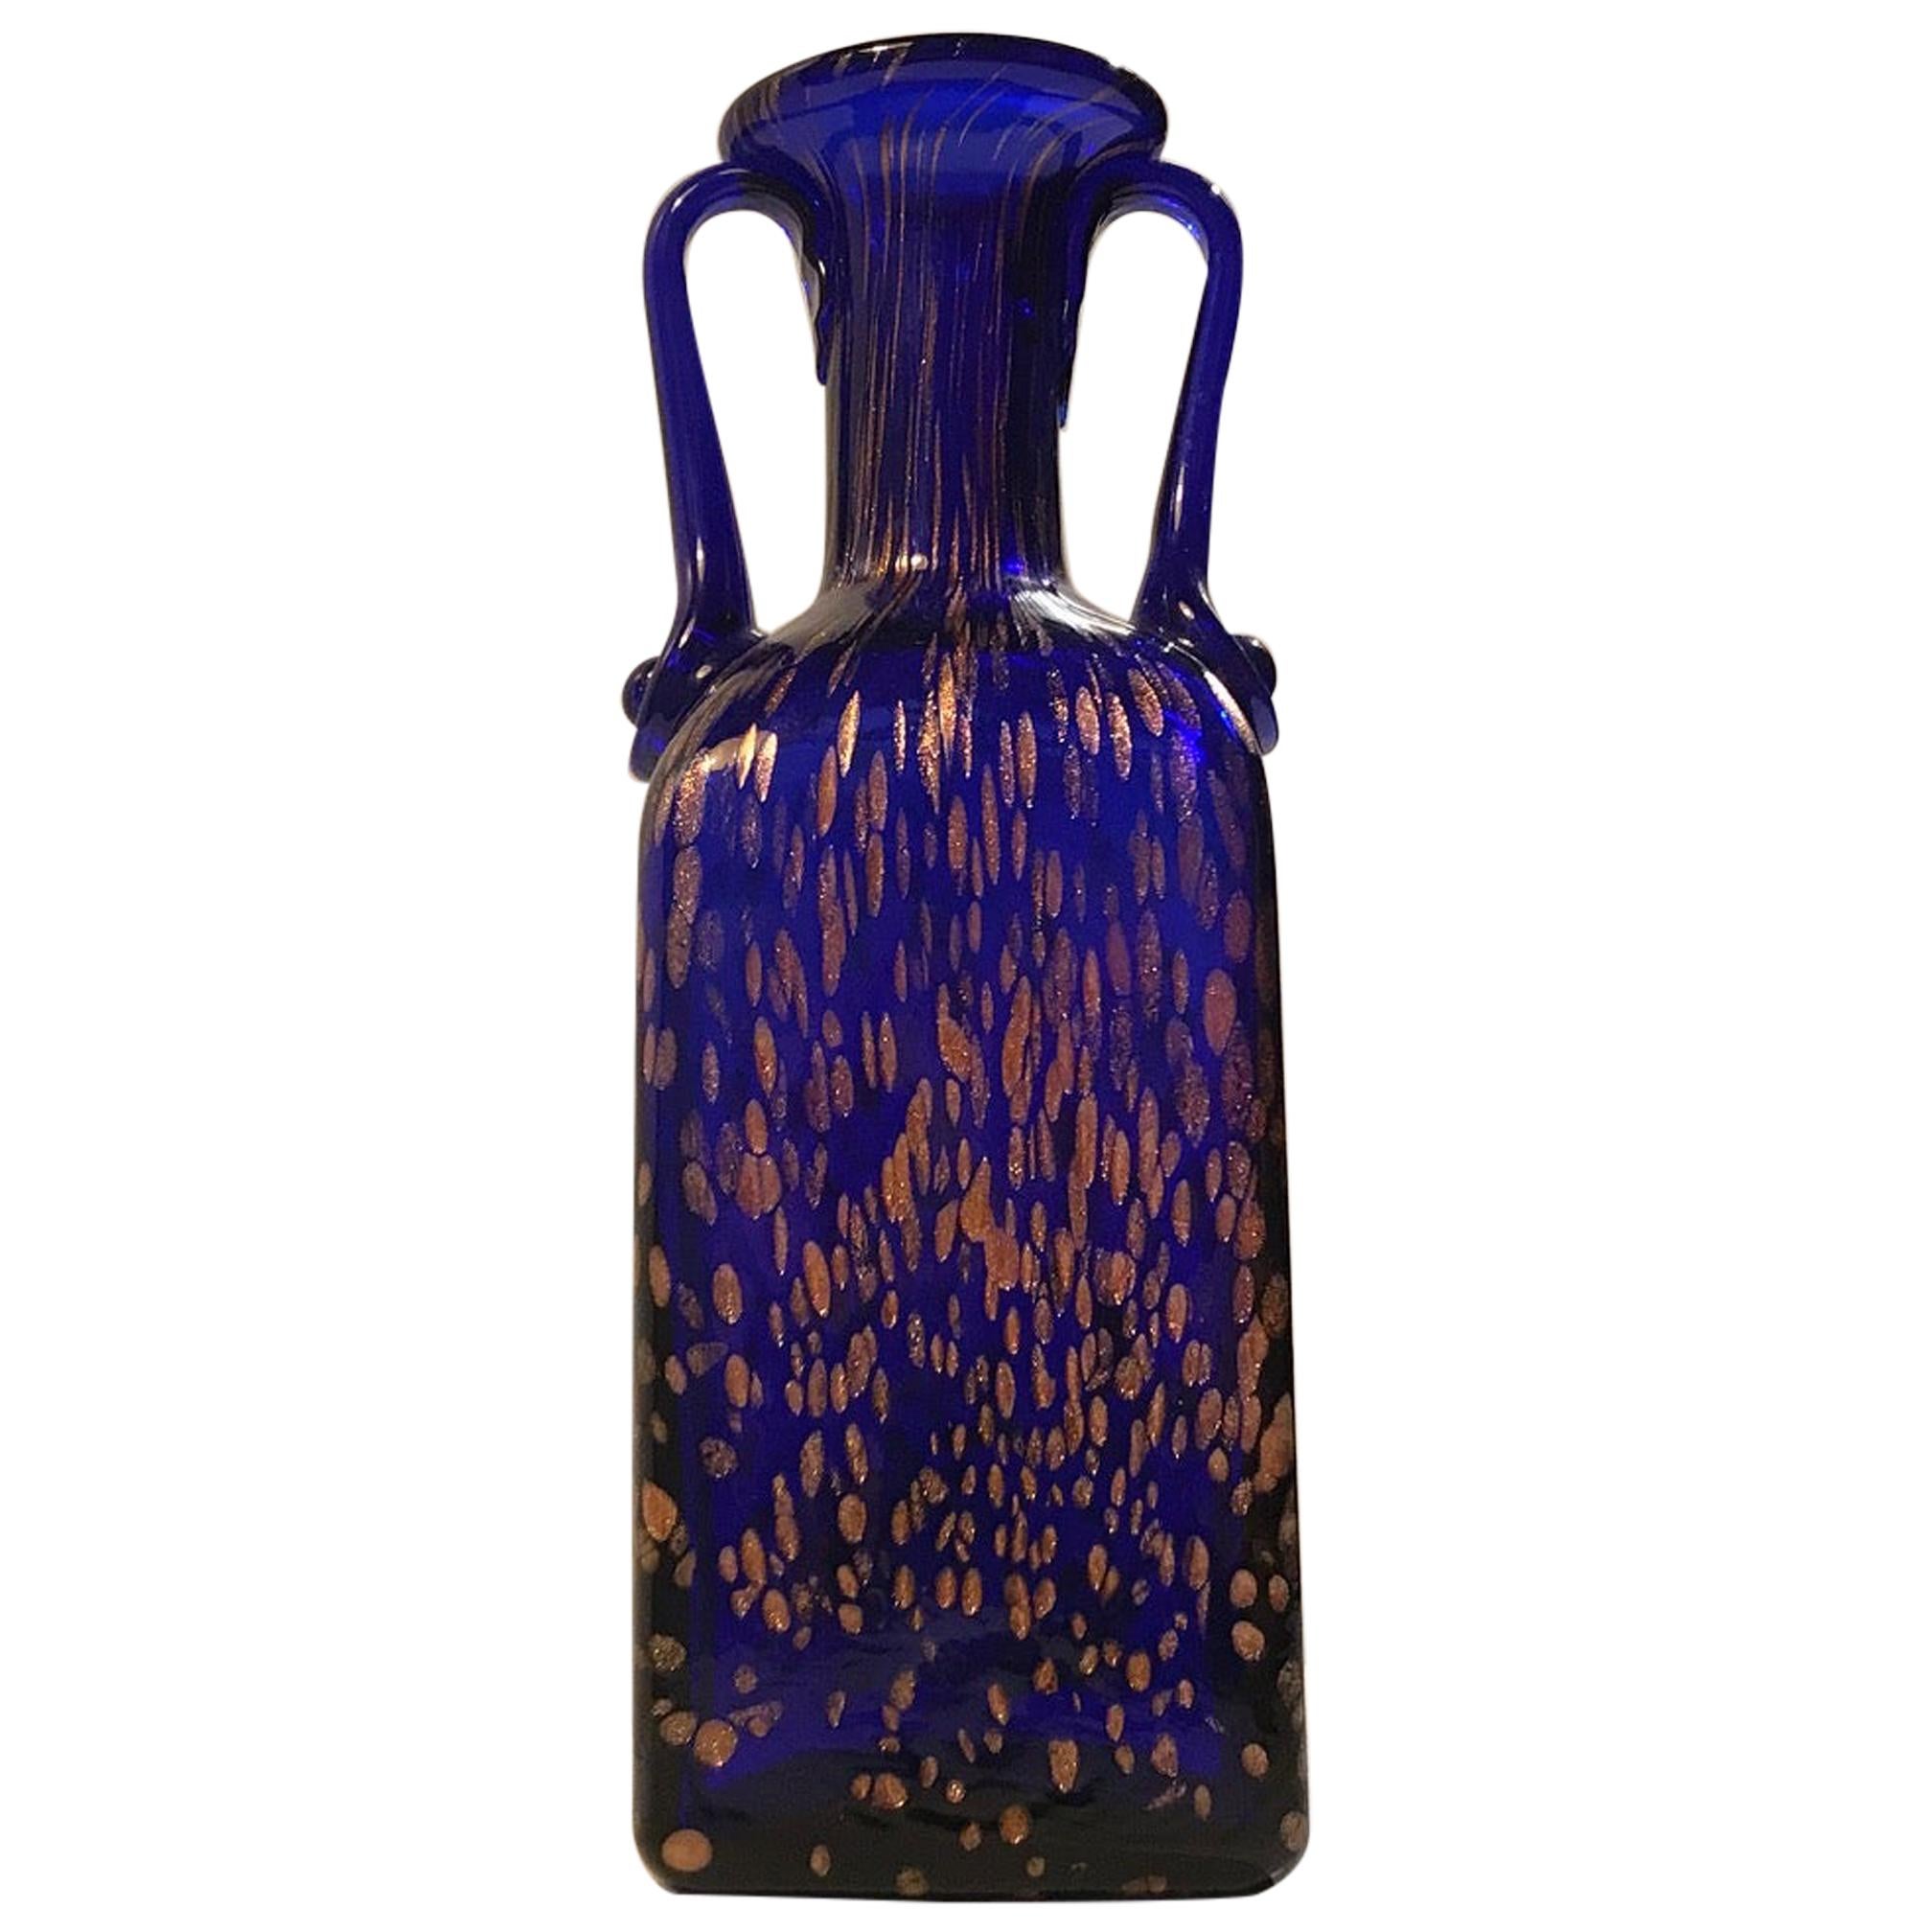 Blue Crystal Vase with Rose Gold Speckles by Joska, 1970s